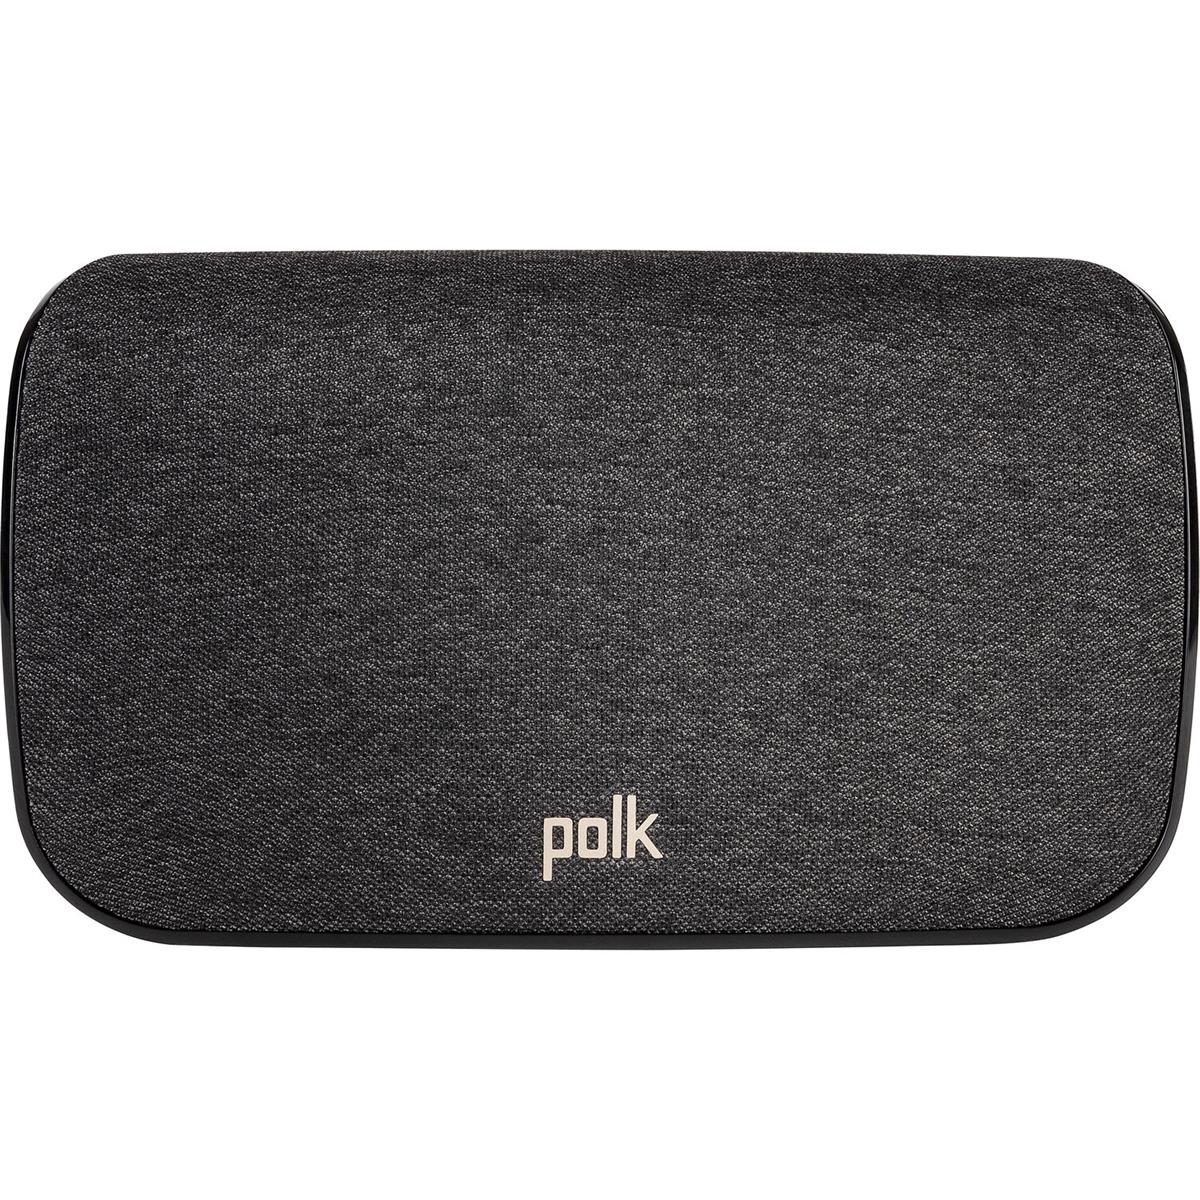 Image of Polk Audio SR2 Wireless Surround Speakers for Select Polk Sound Bars